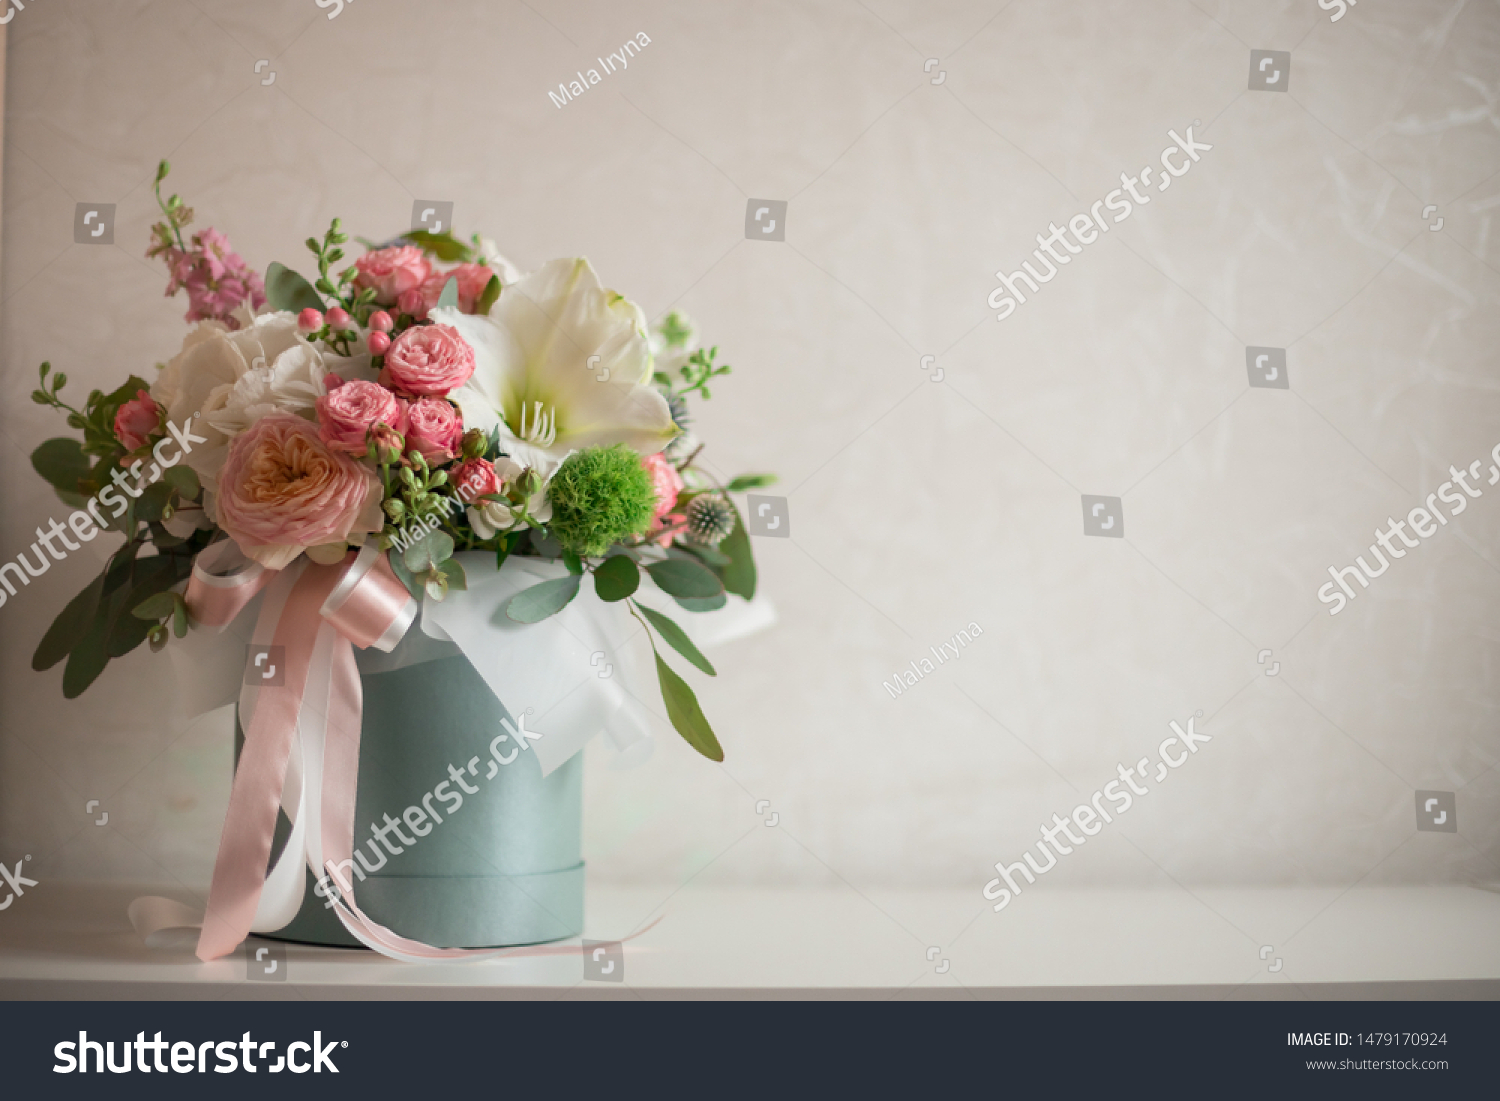 large flower arrangements for weddings